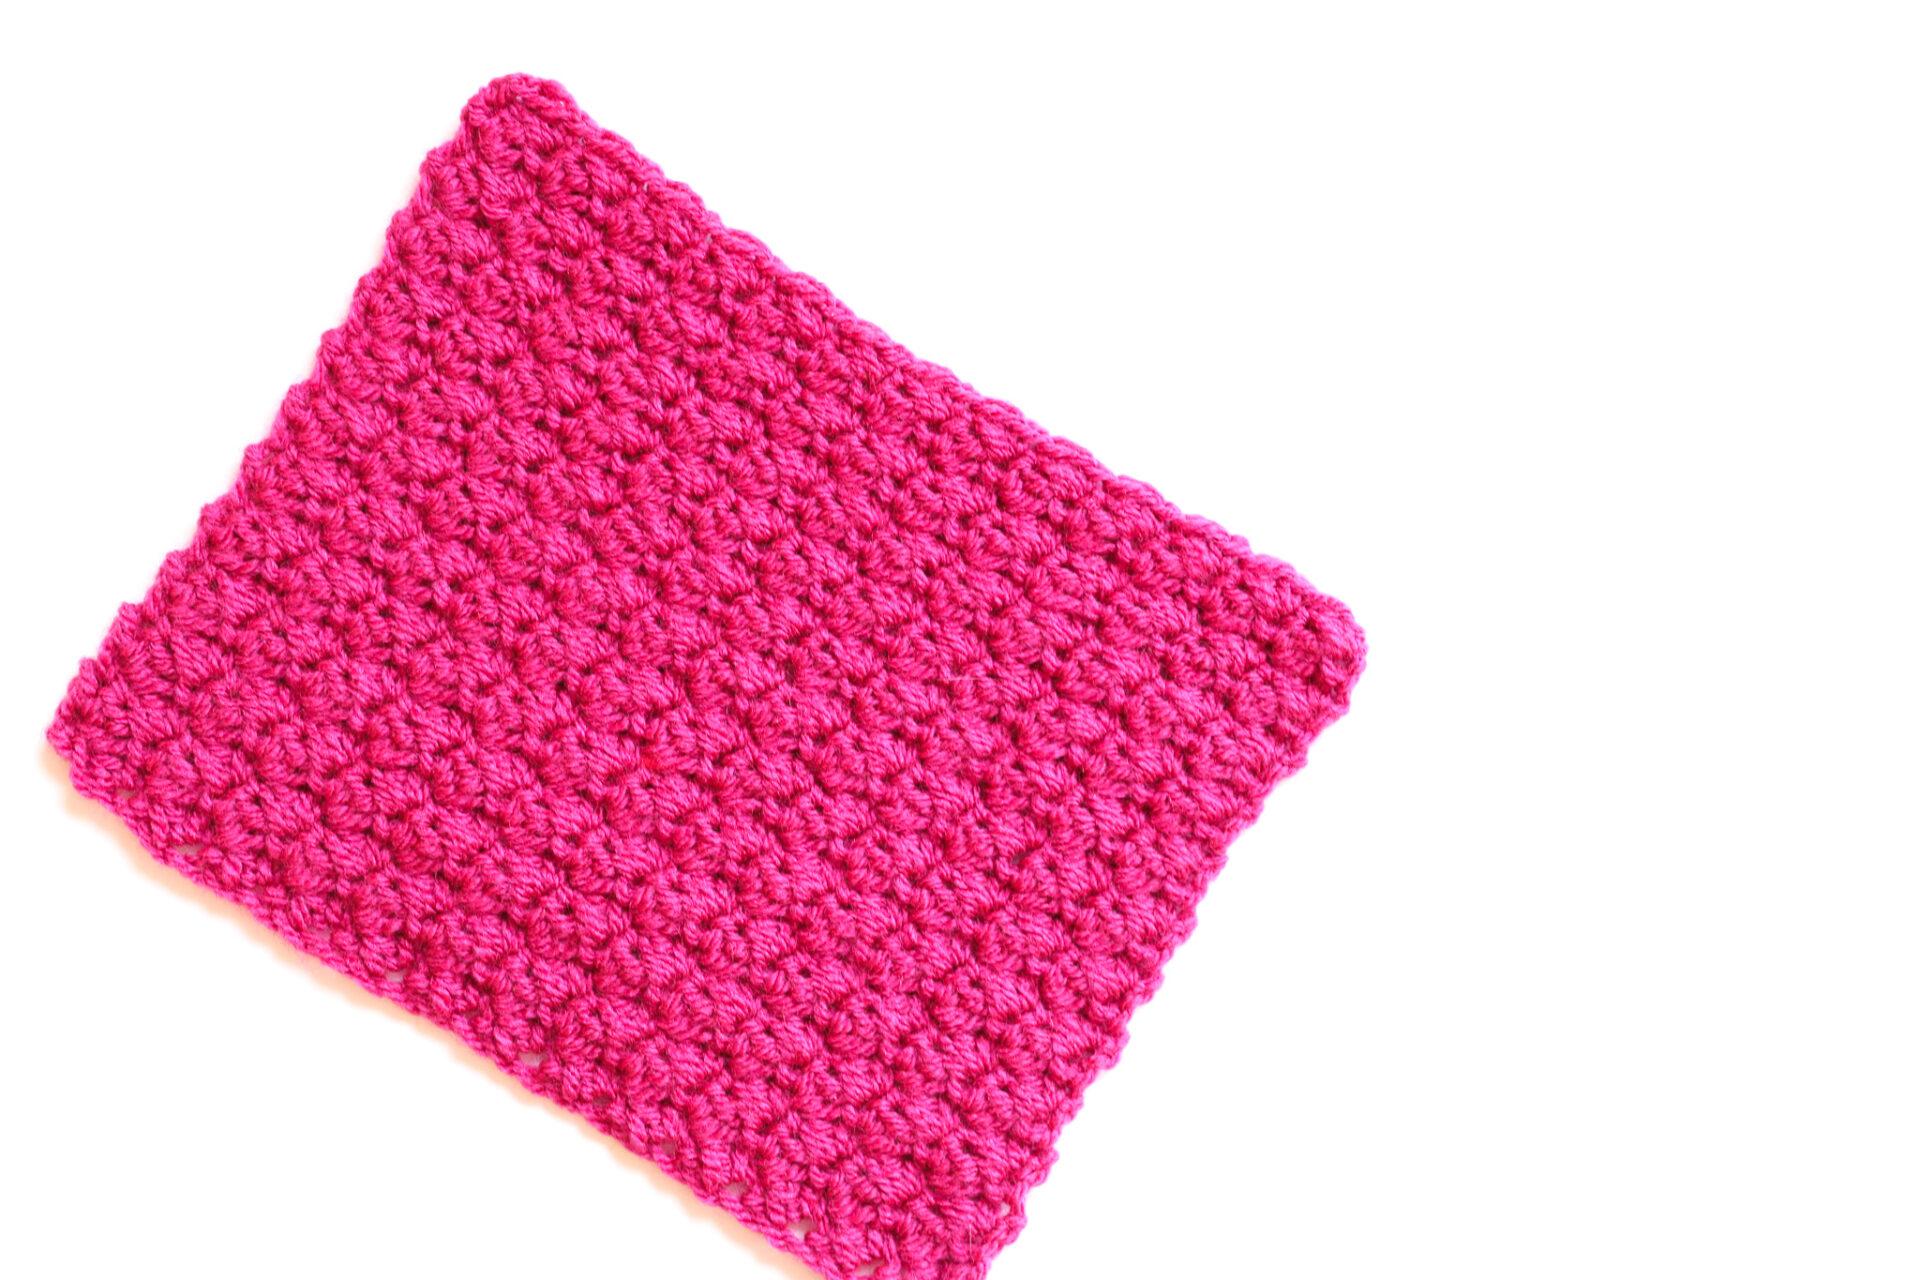 Crochet Suzette Stitch